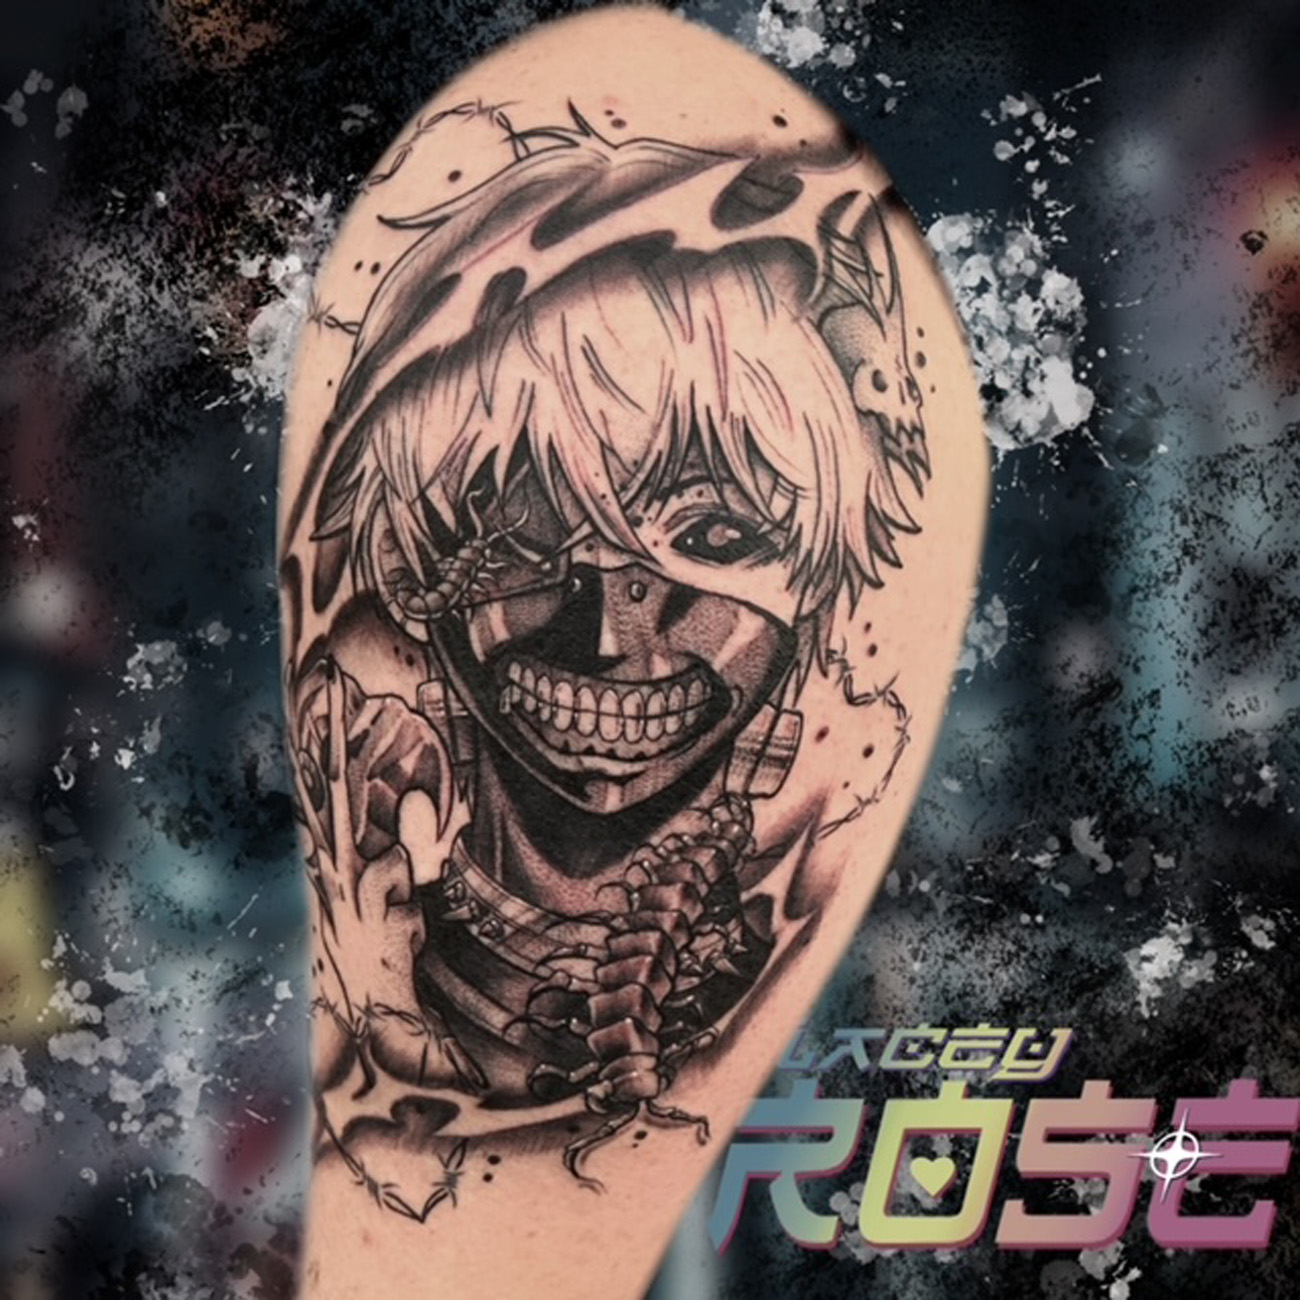 Anime Tattoo Artist Ryan Burke